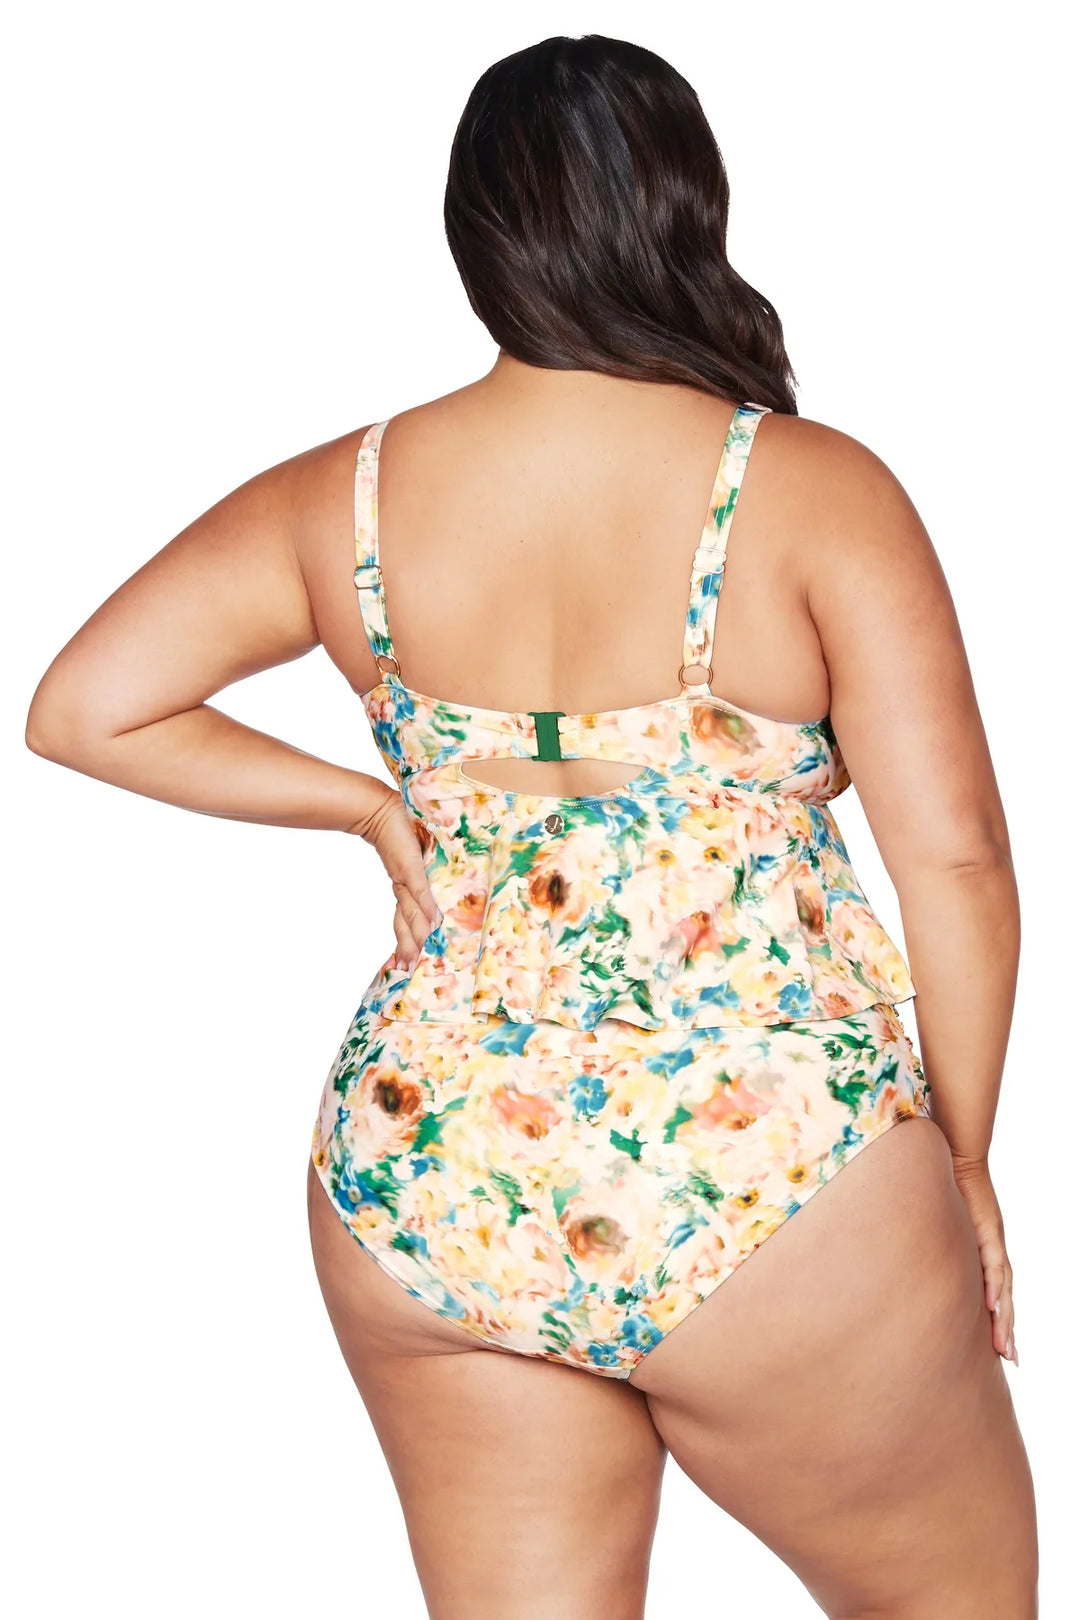 Artesands Women's Plus Size Ze Blu Chagall Midkini Curve Fit Bikini Top  Swimsuit